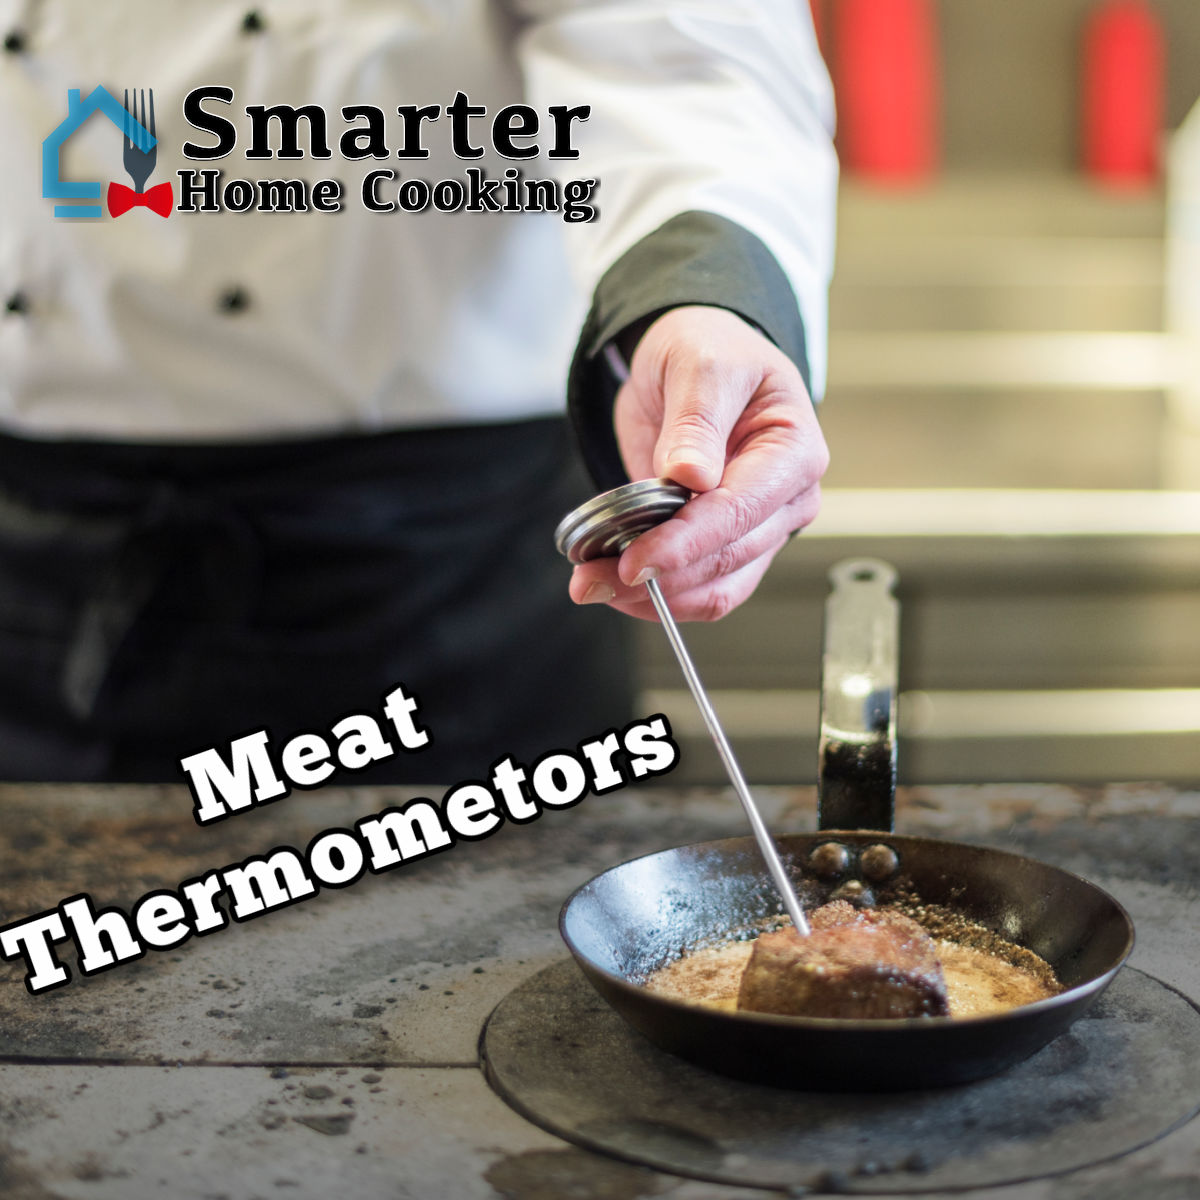 https://smarterhomecooking.com/wp-content/uploads/2020/12/SHC-meat-thermometors-featured-image.jpg